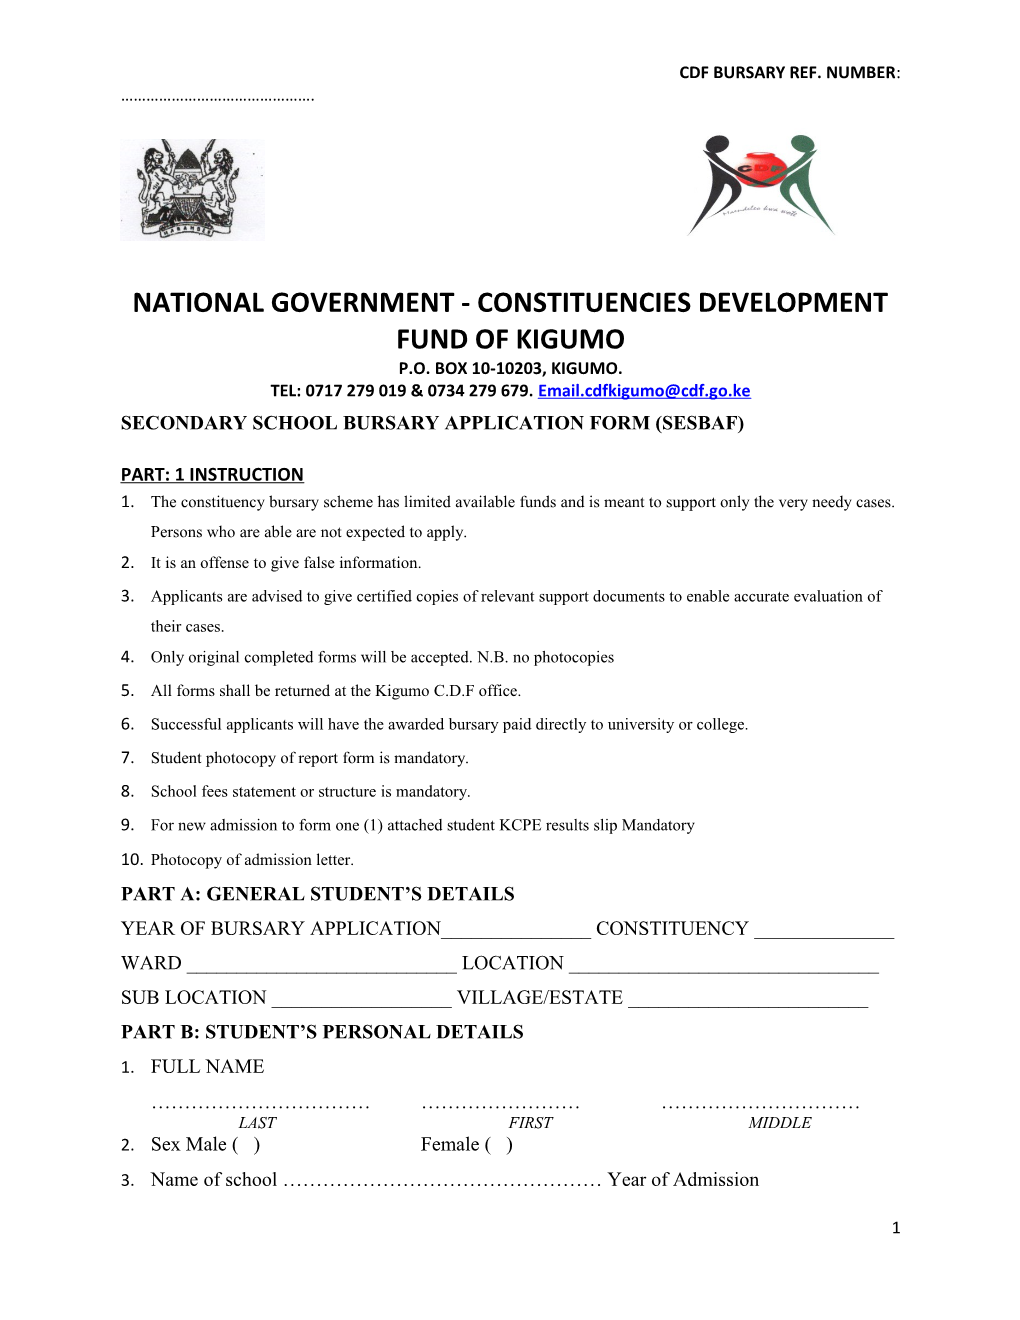 National Government - Constituencies Development Fundof Kigumo